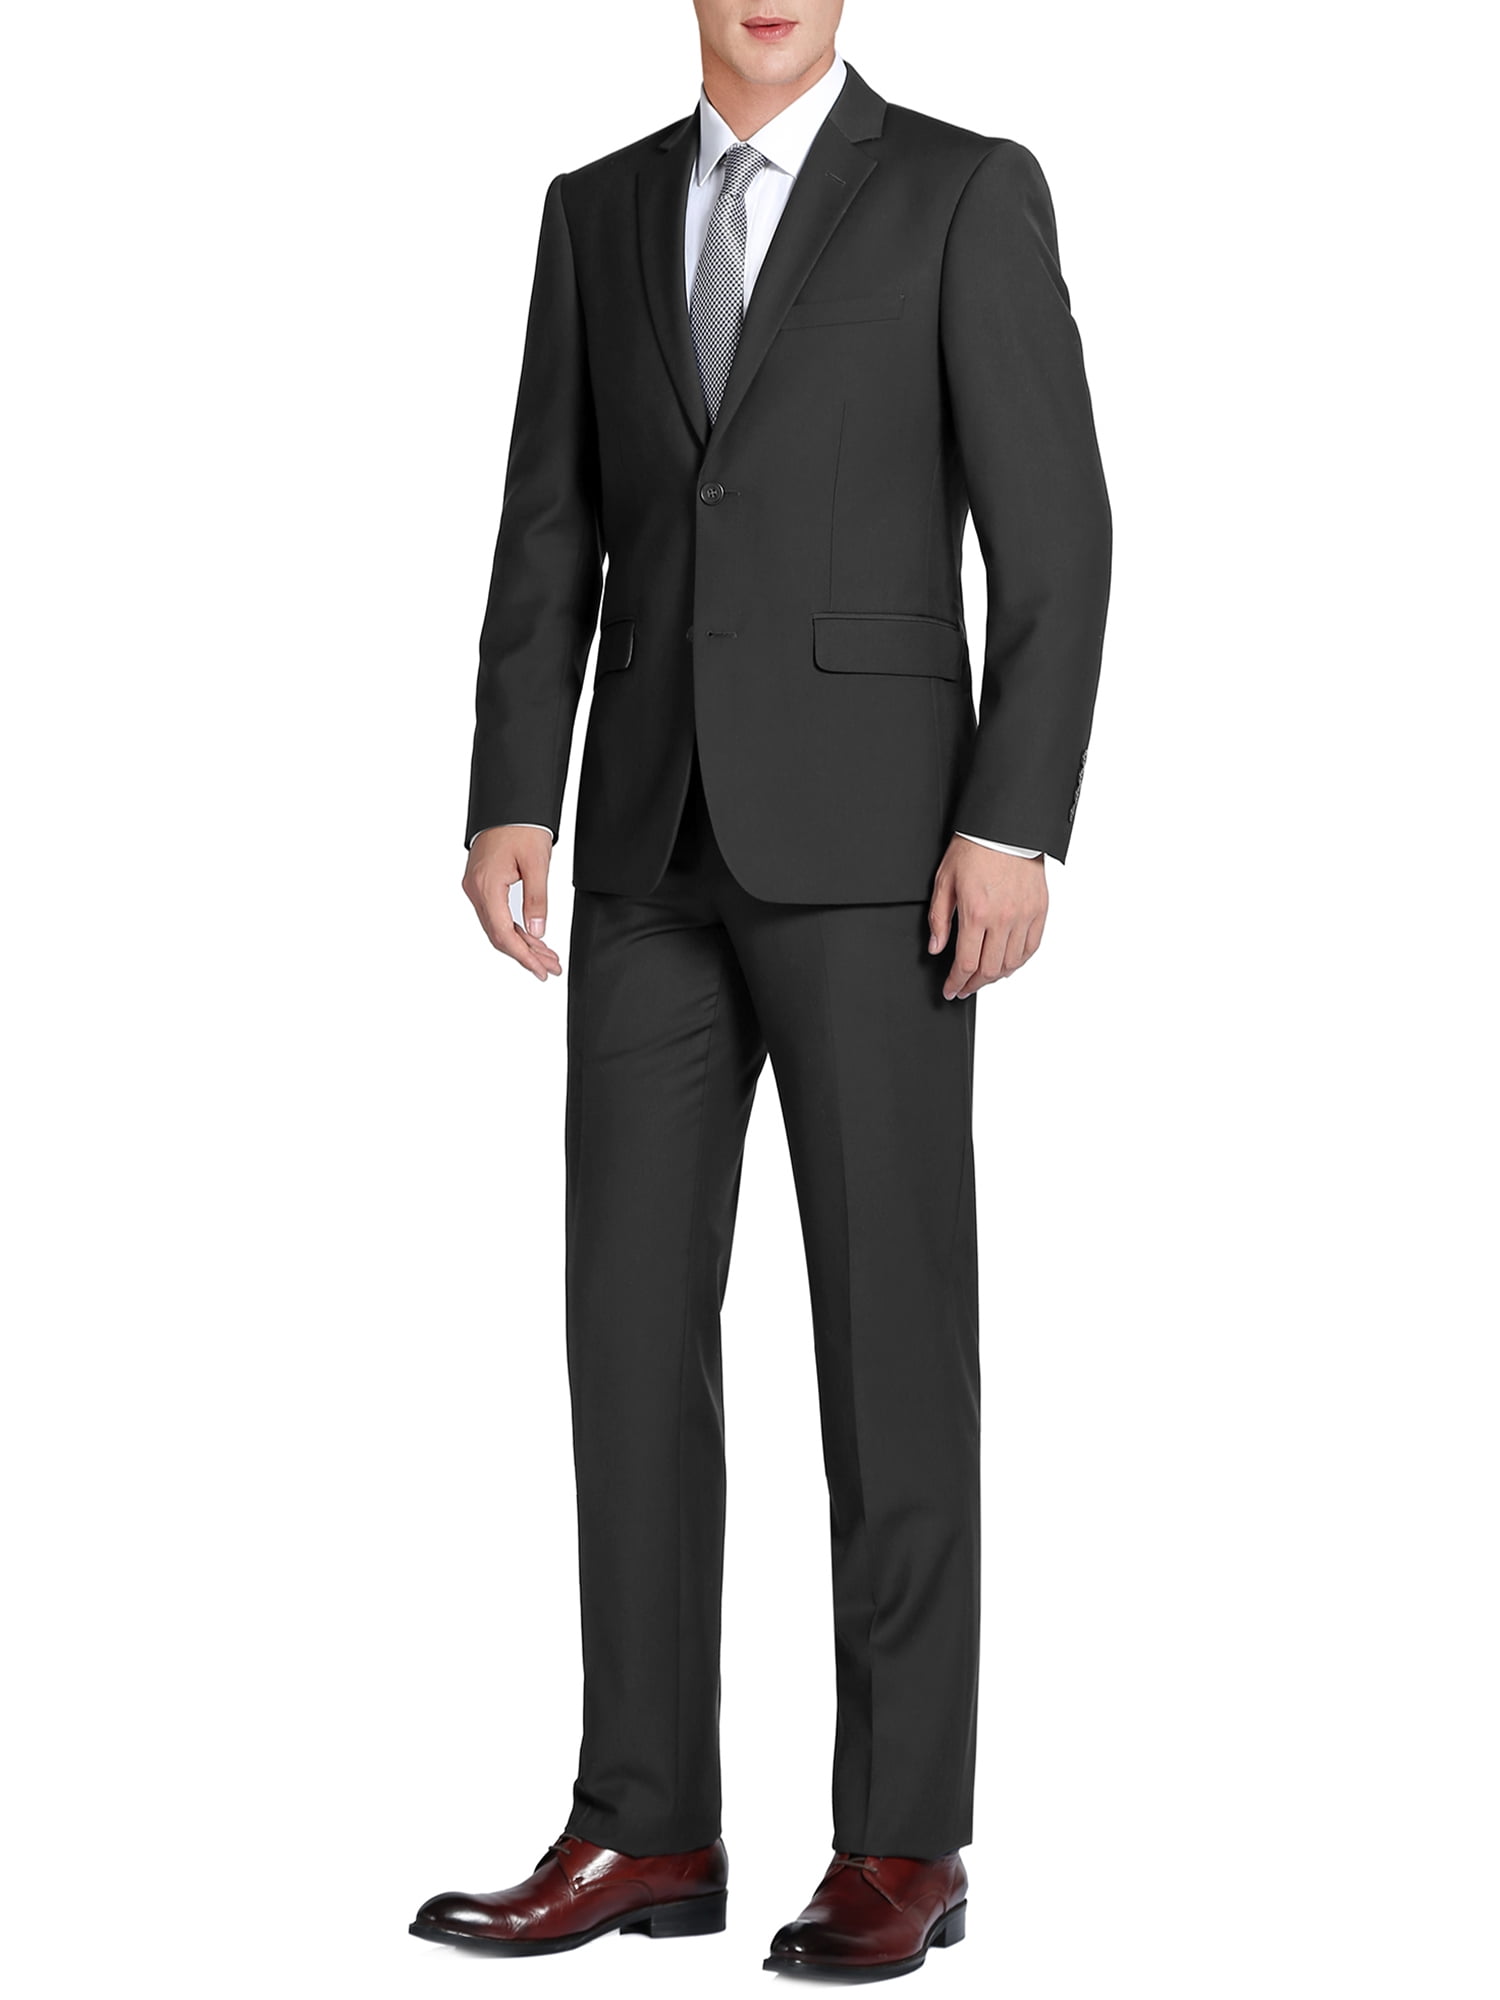 Mens Suits 3 Piece Slim Fit Checked Suit Blue/Black Single Breasted Herringbone Vintage Suit Tuxedo Formal Business Jacket Waistcoat Trouser